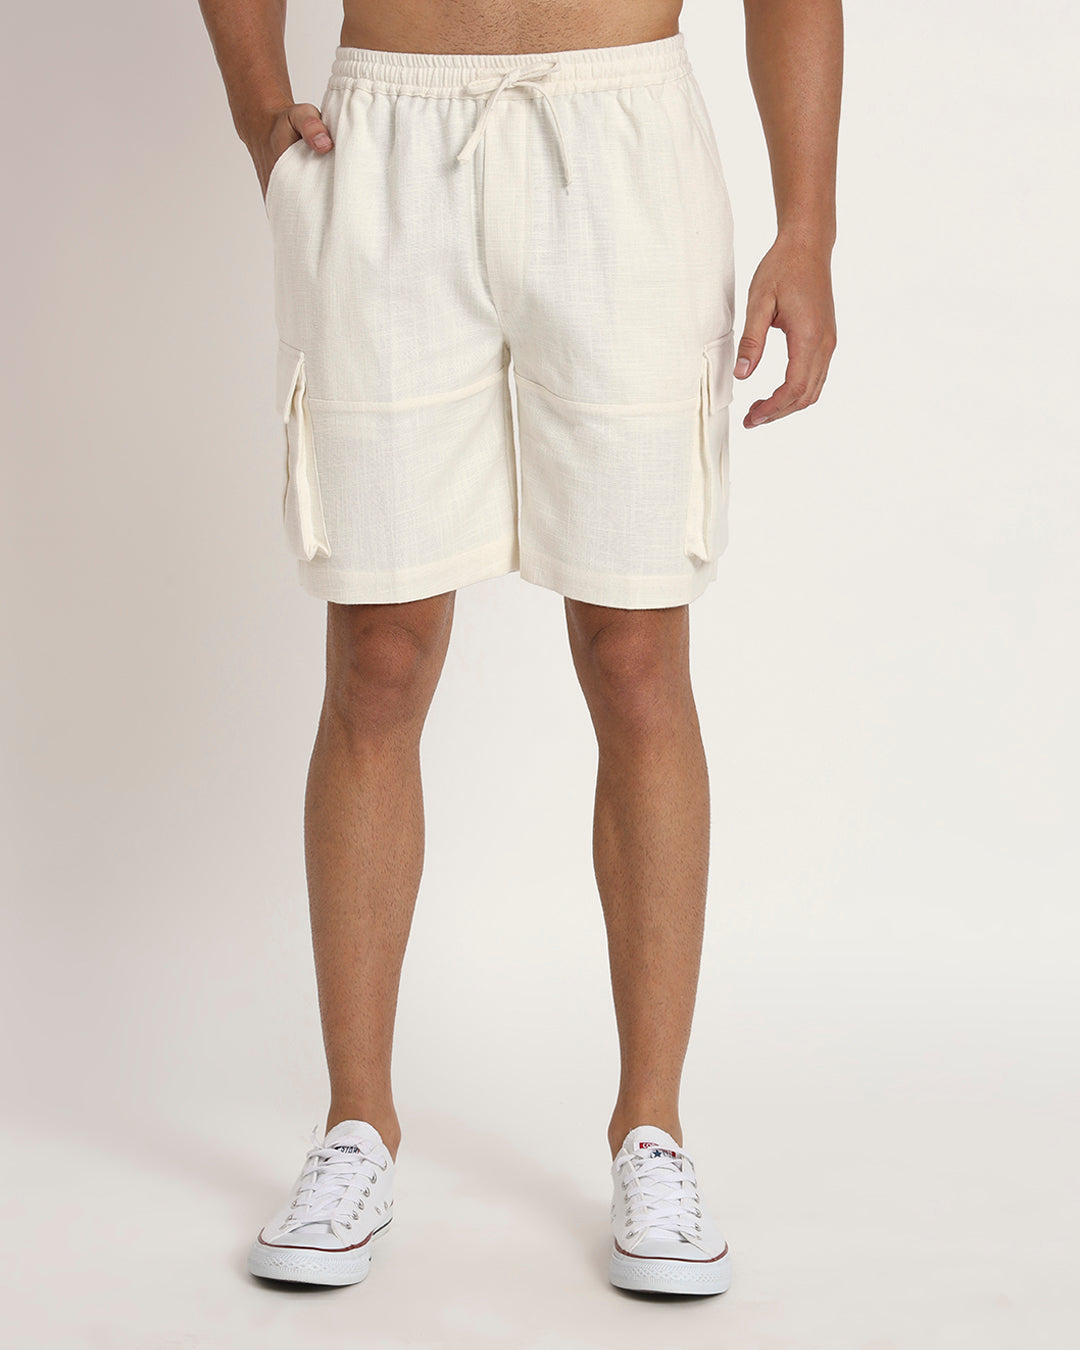 Combo: Classic Black Half Sleeves Men's Shirt & Cargo Shorts